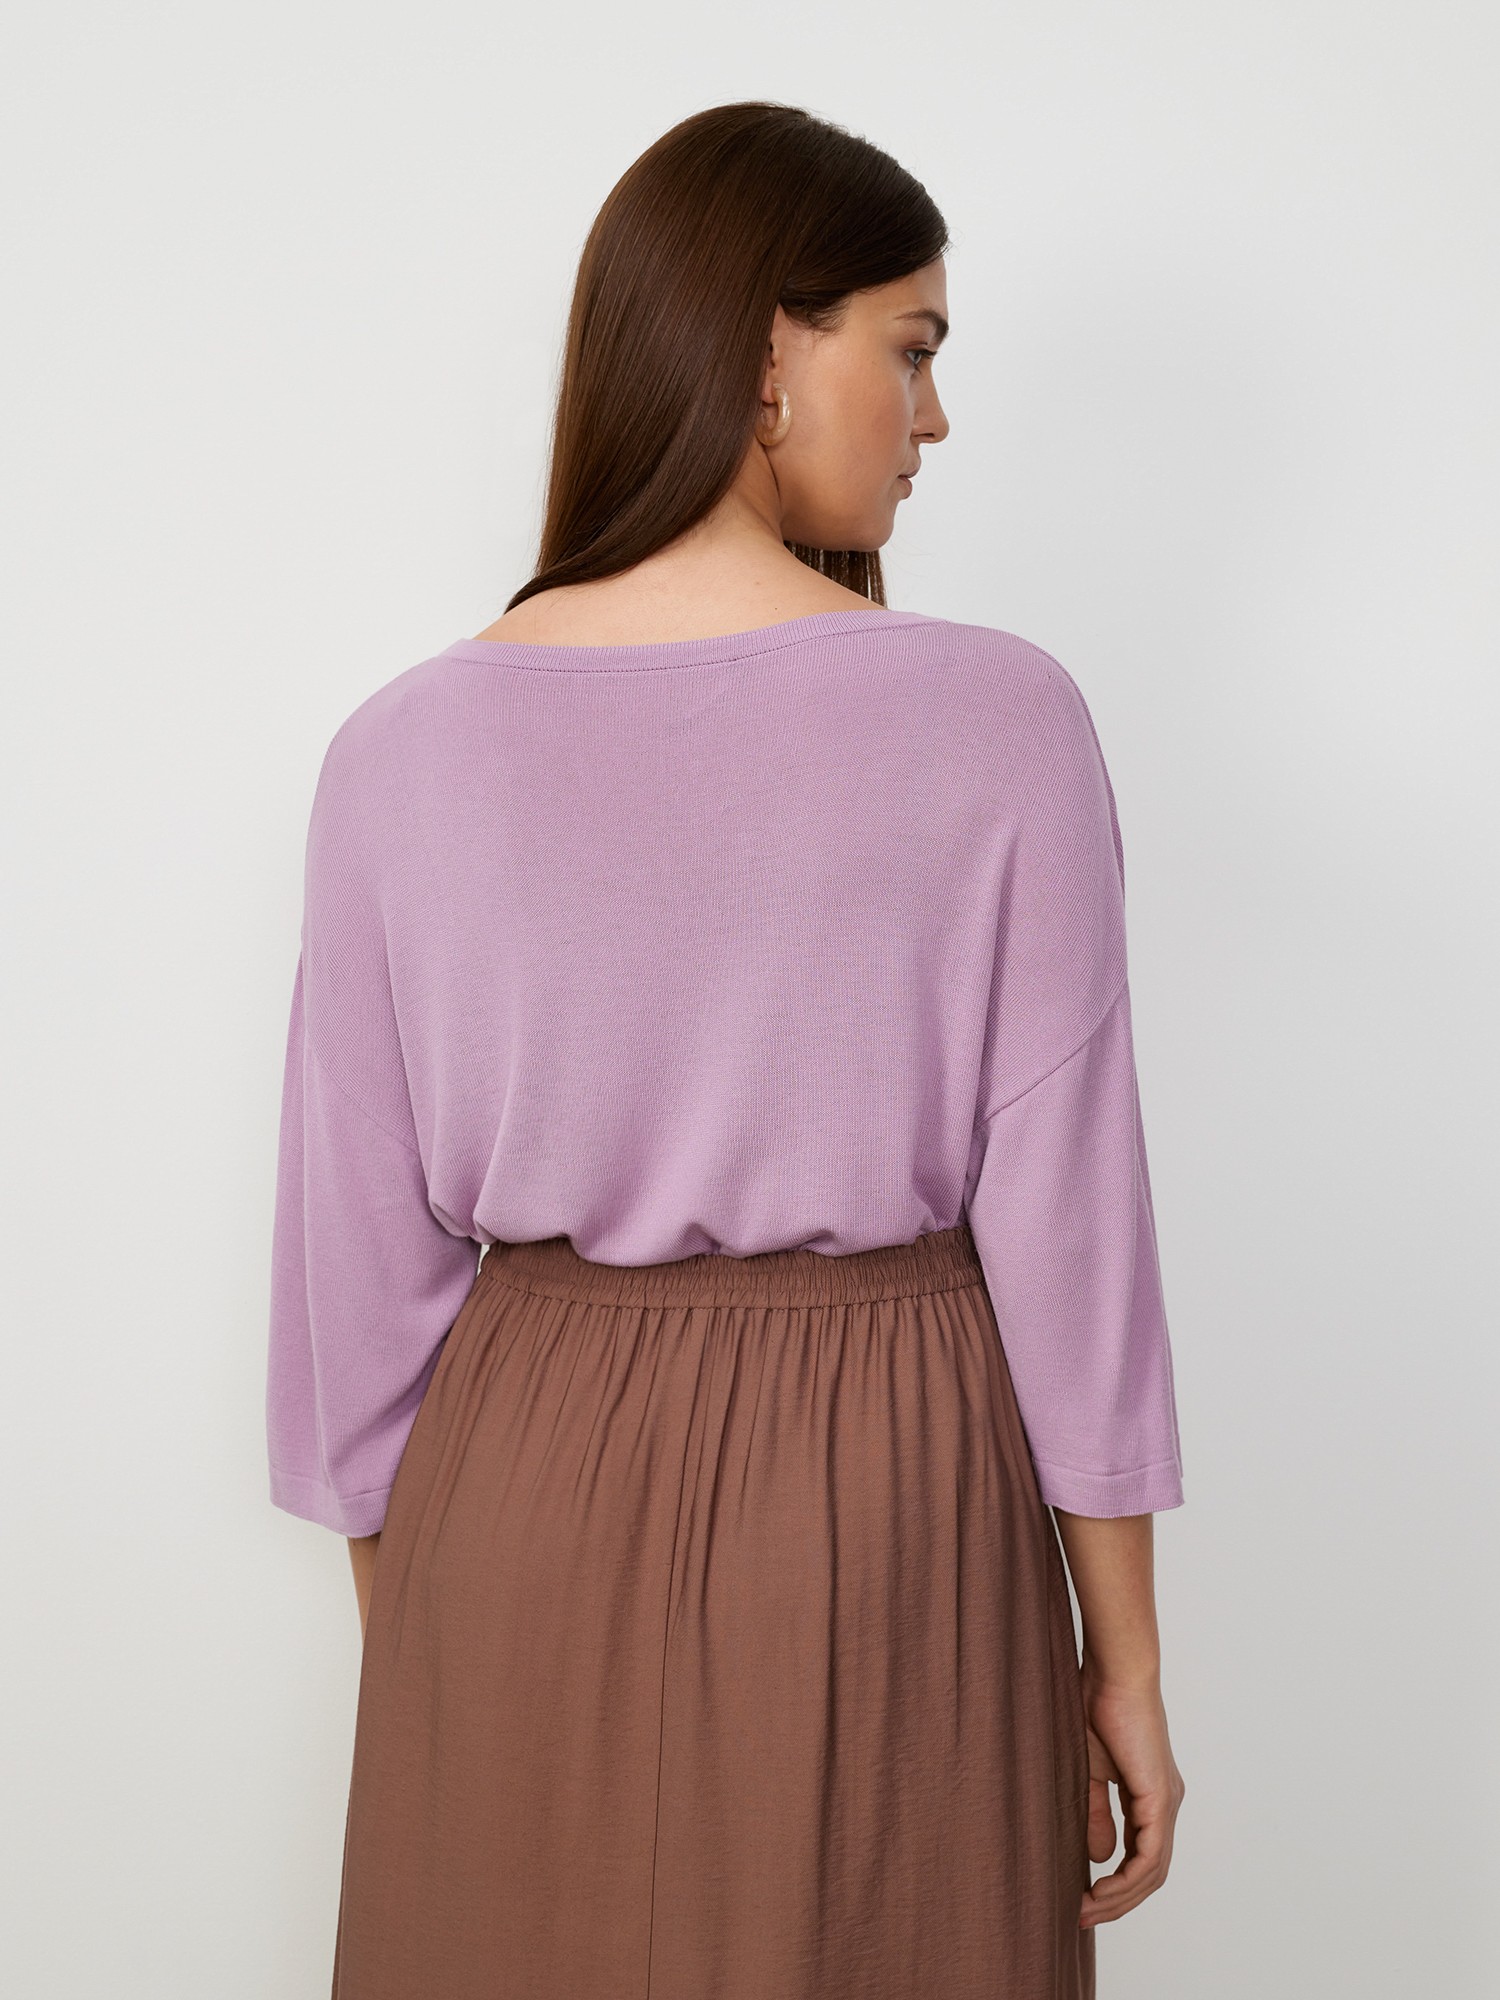 Блуза вязаная с монилью Lalis BL1069V, цвет фиолетовый, размер 48 - фото 4